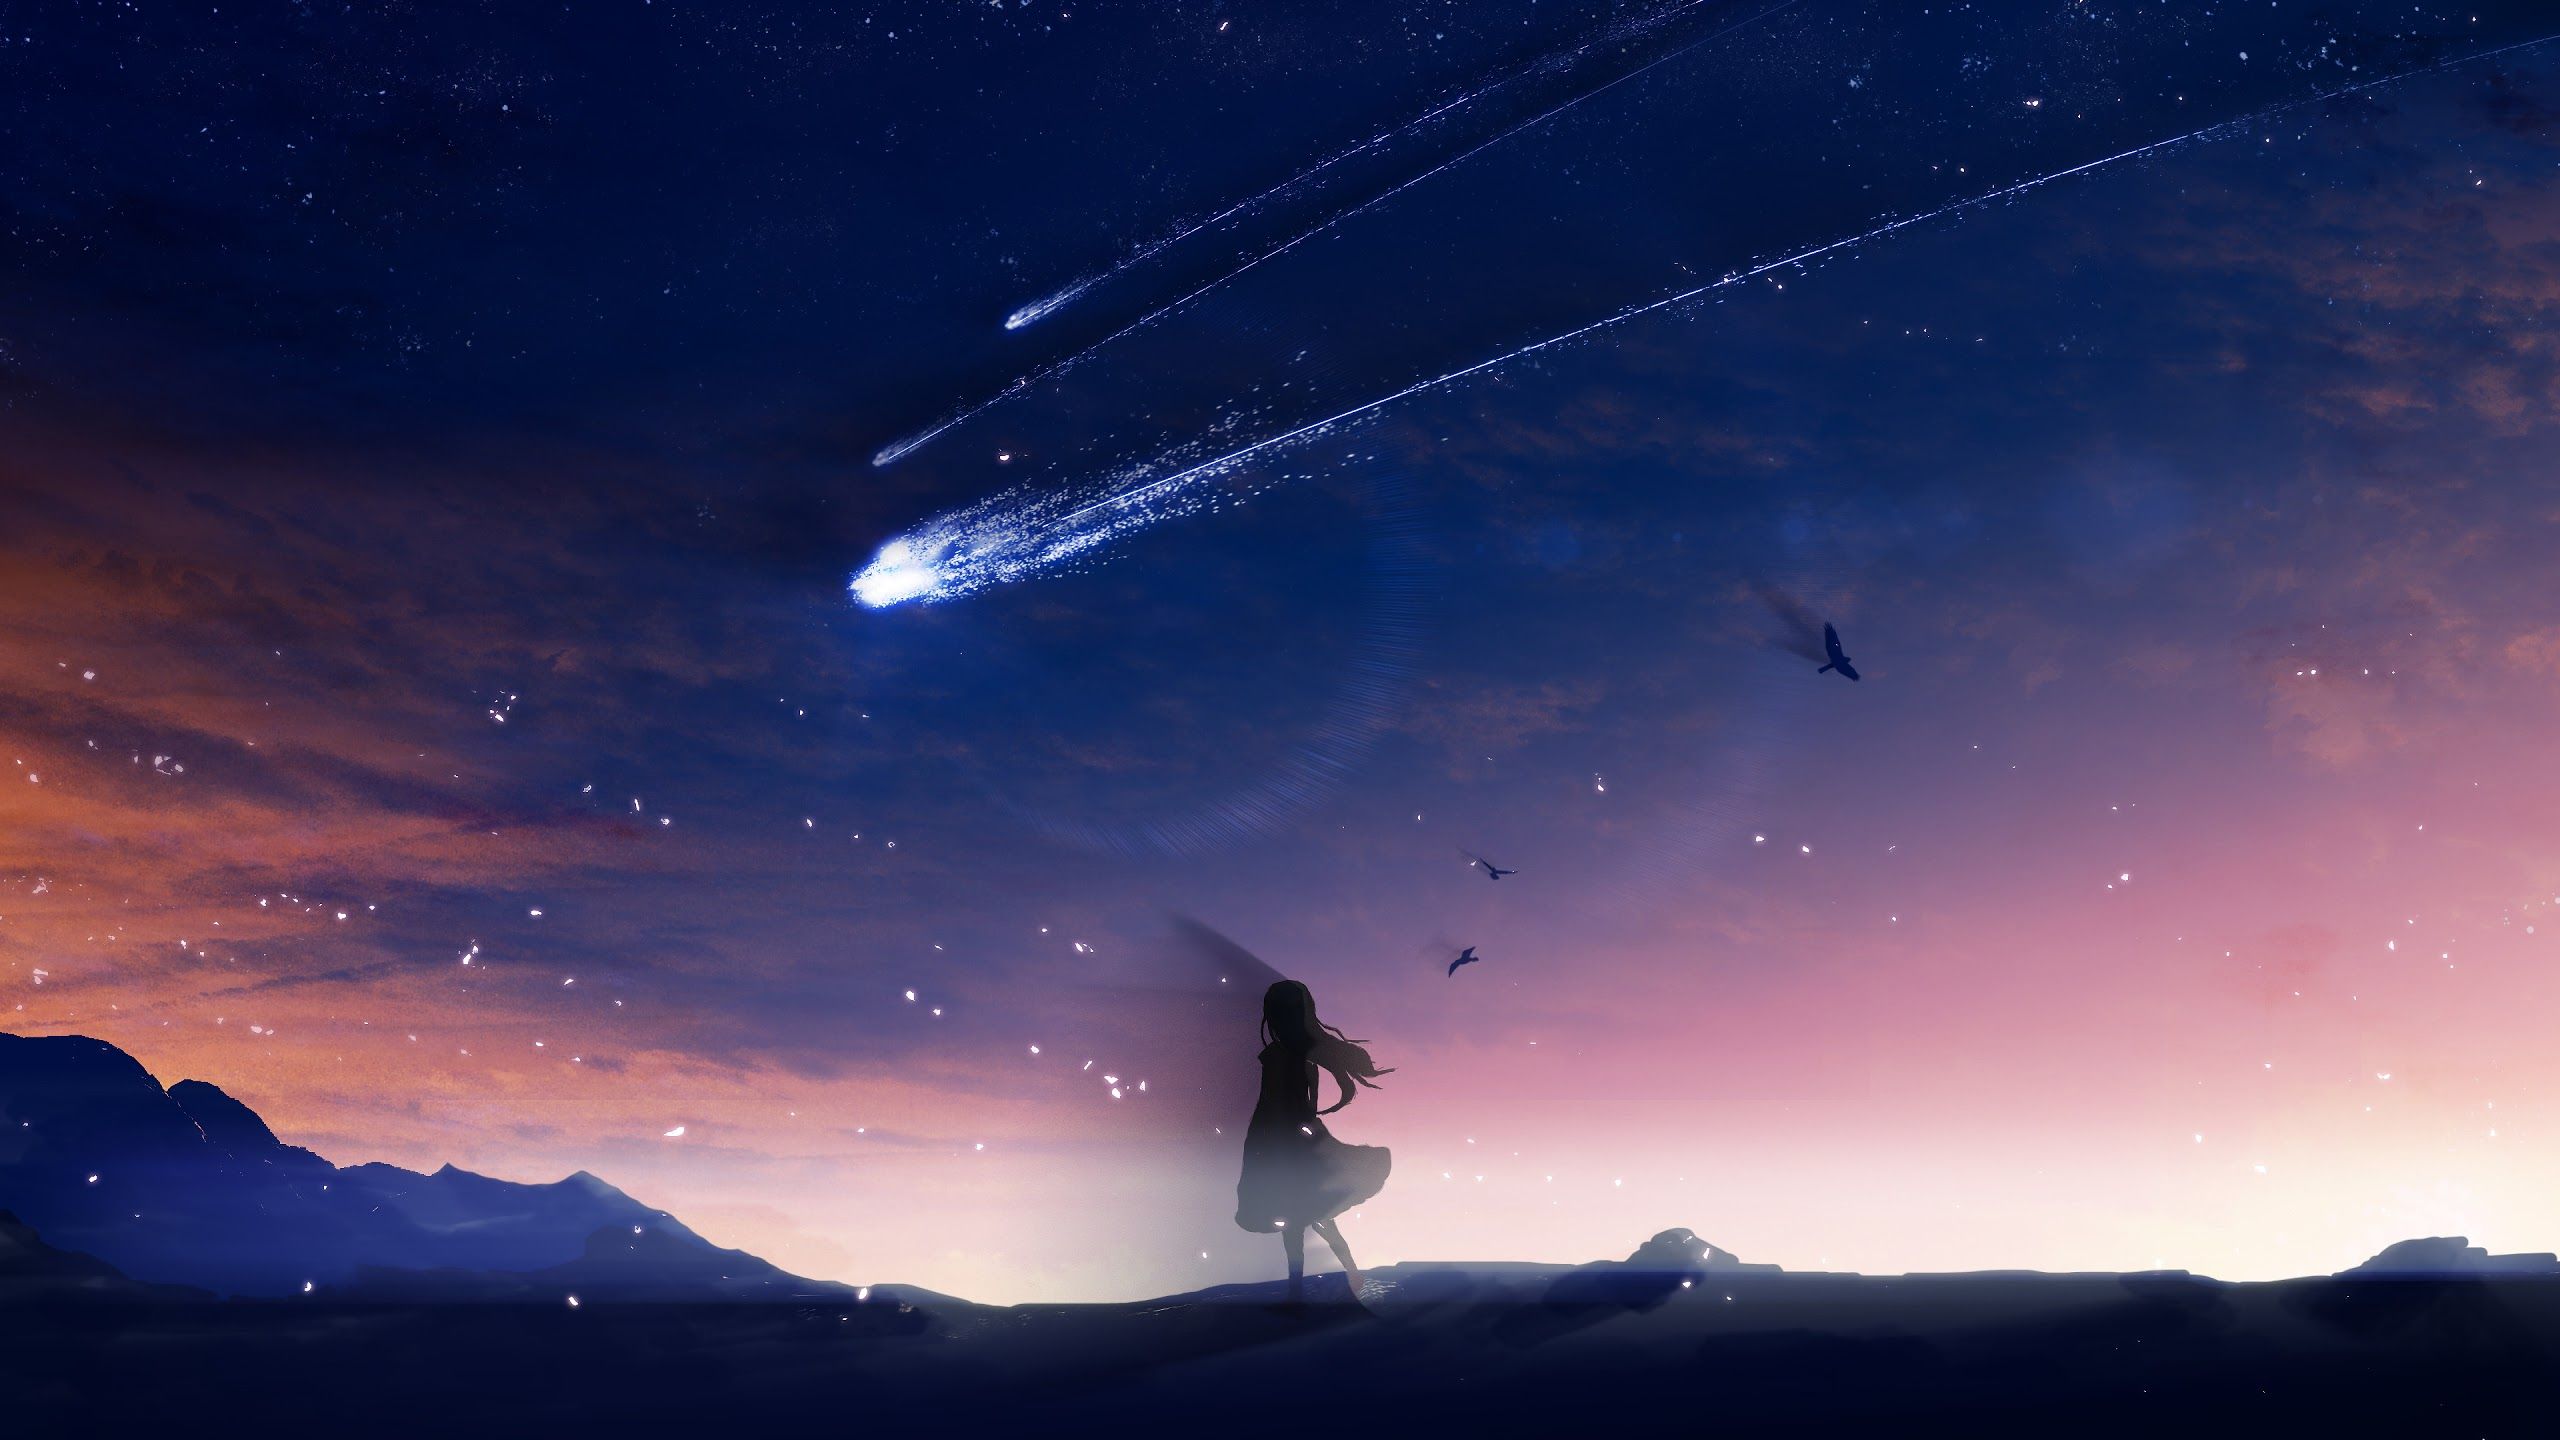 Anime Wallpaper Night Sky